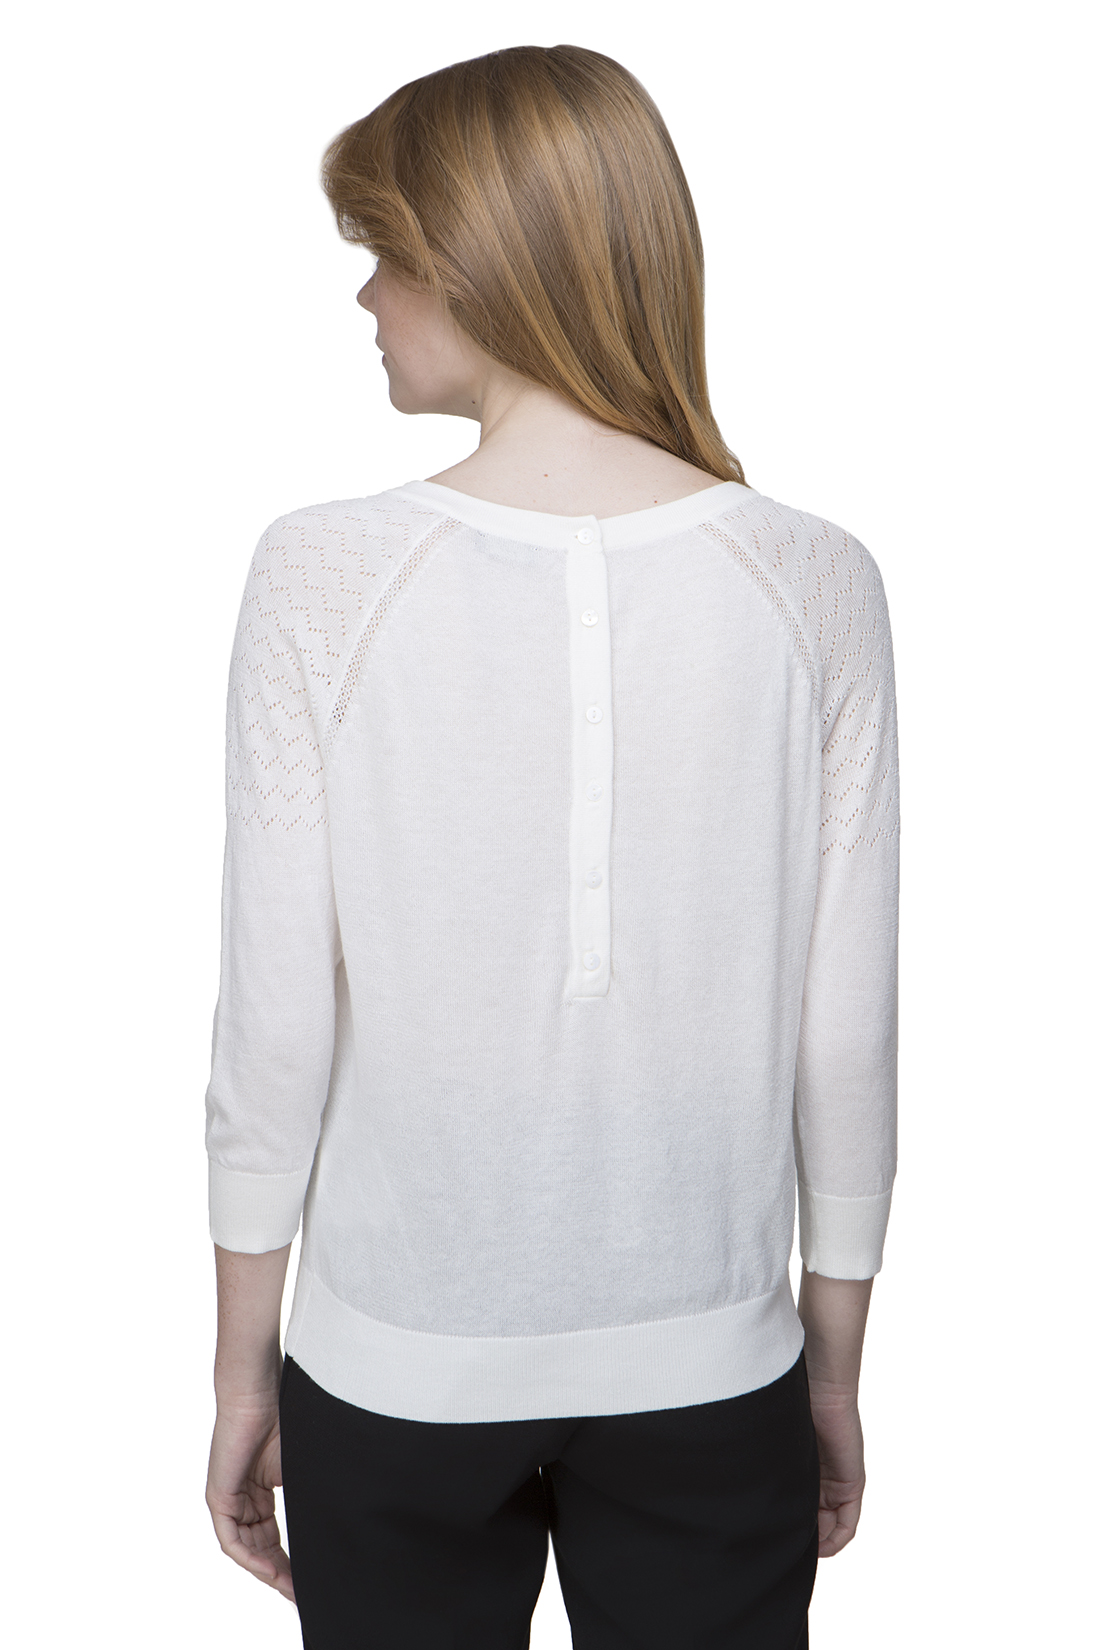 Пуловер с ажурными рукавами (арт. baon B137007), размер XS, цвет белый Пуловер с ажурными рукавами (арт. baon B137007) - фото 2